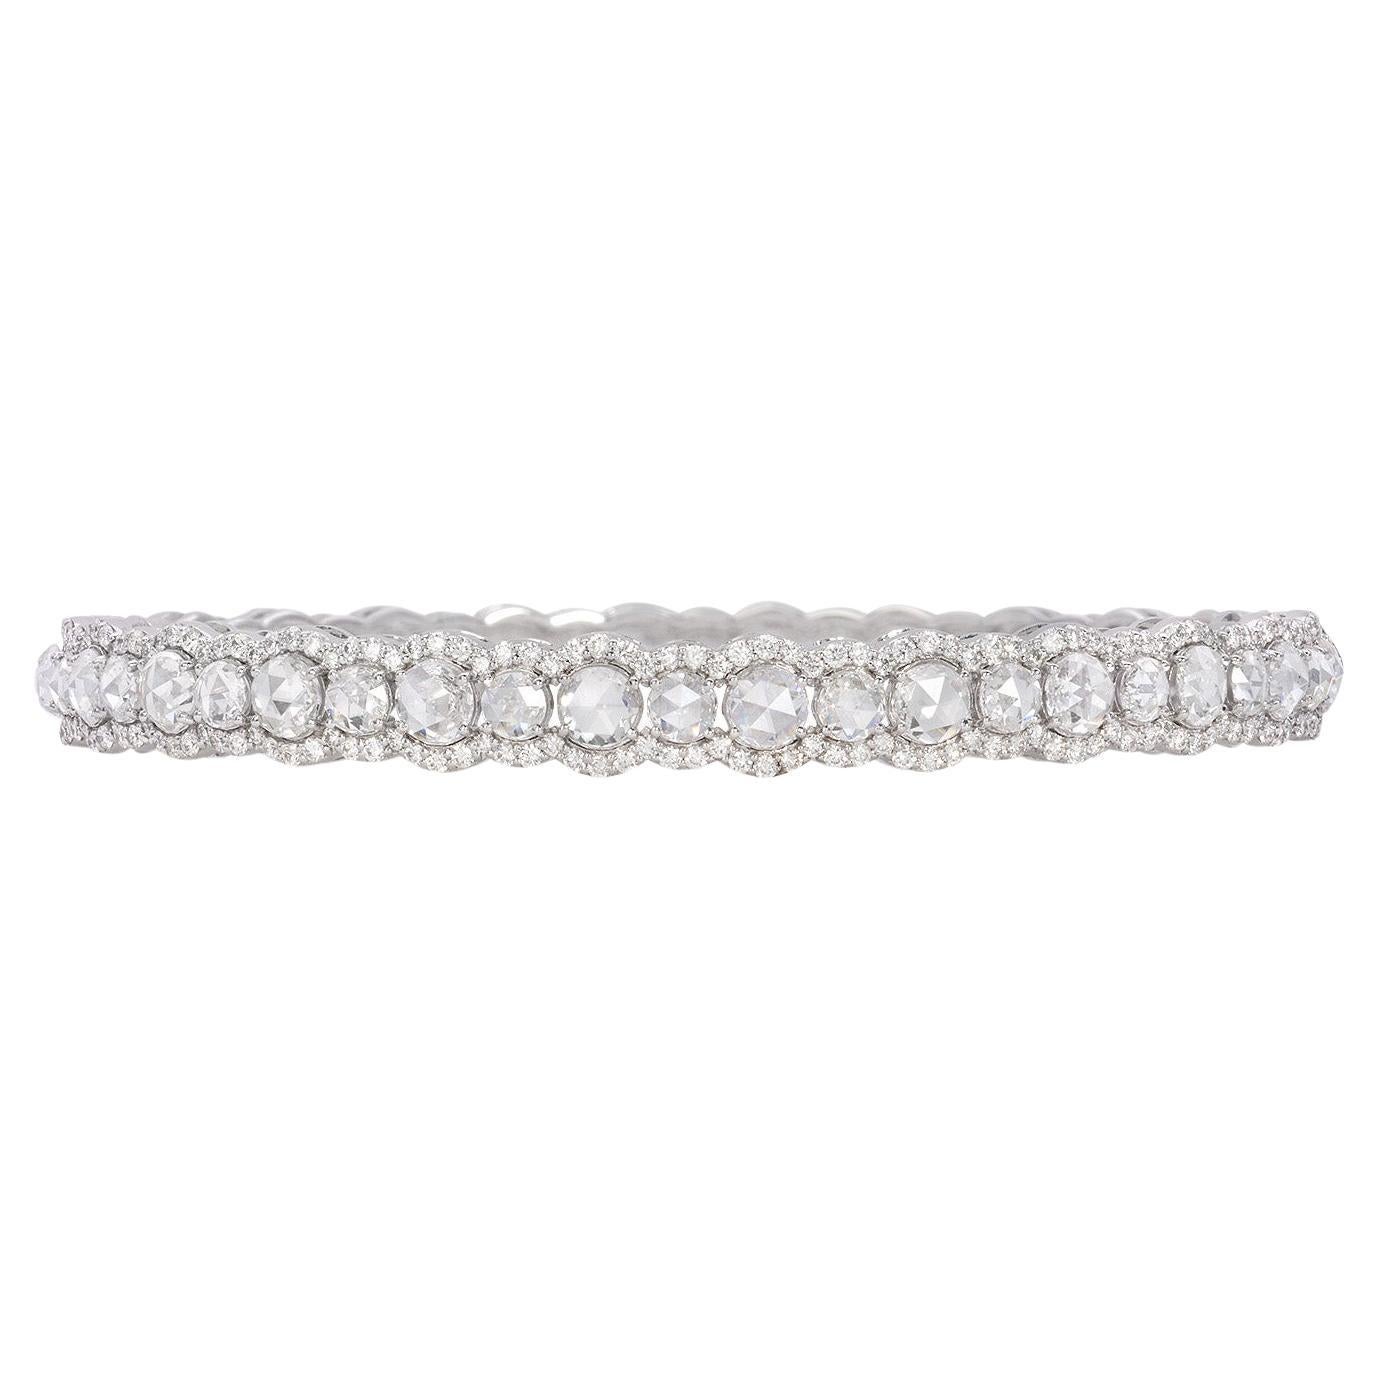 18K White Gold Tennis Bracelet with Rose Cut Diamonds (2.37 Carats)